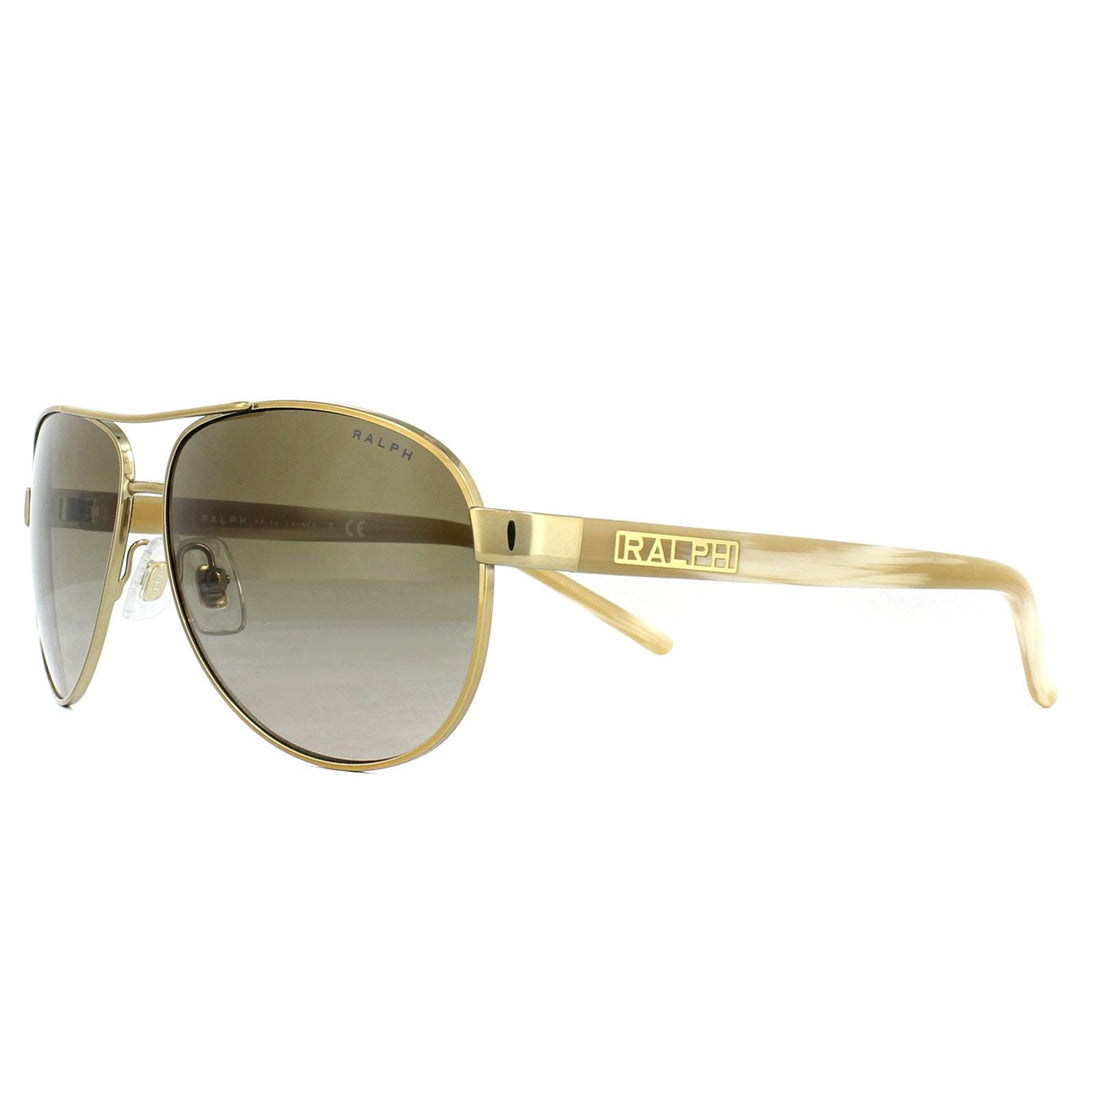 Ralph by Ralph Lauren Sunglasses 4004 101/13 Gold Cream Brown Gradient